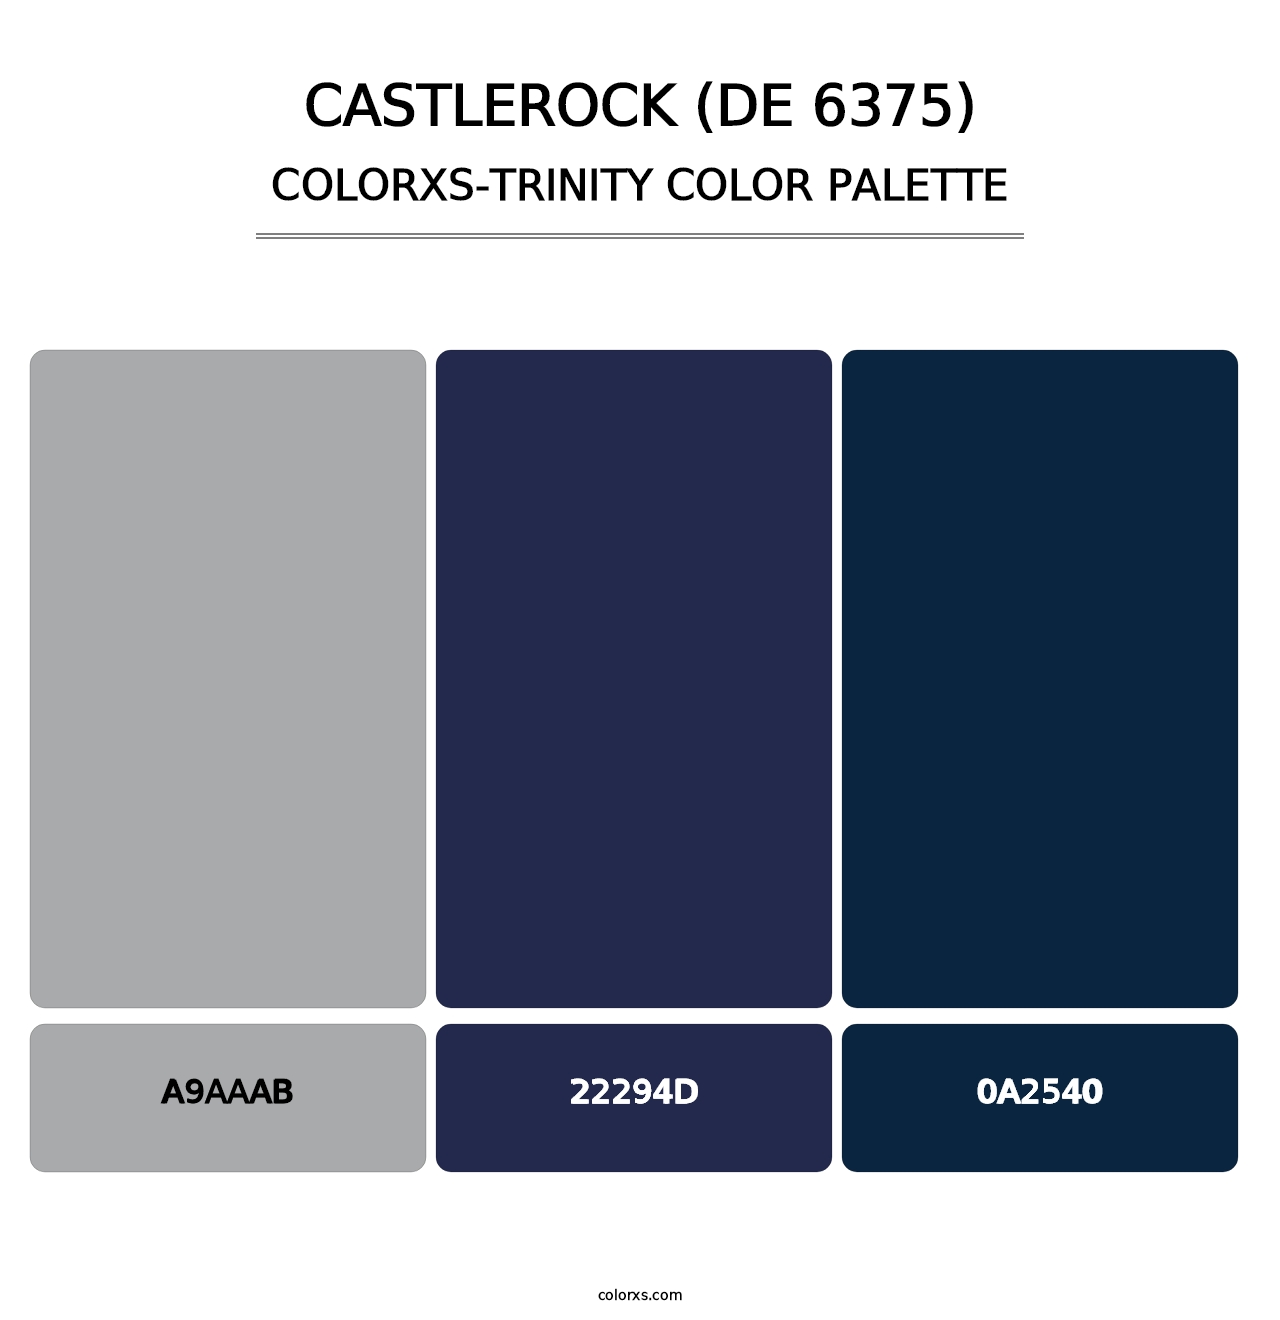 Castlerock (DE 6375) - Colorxs Trinity Palette